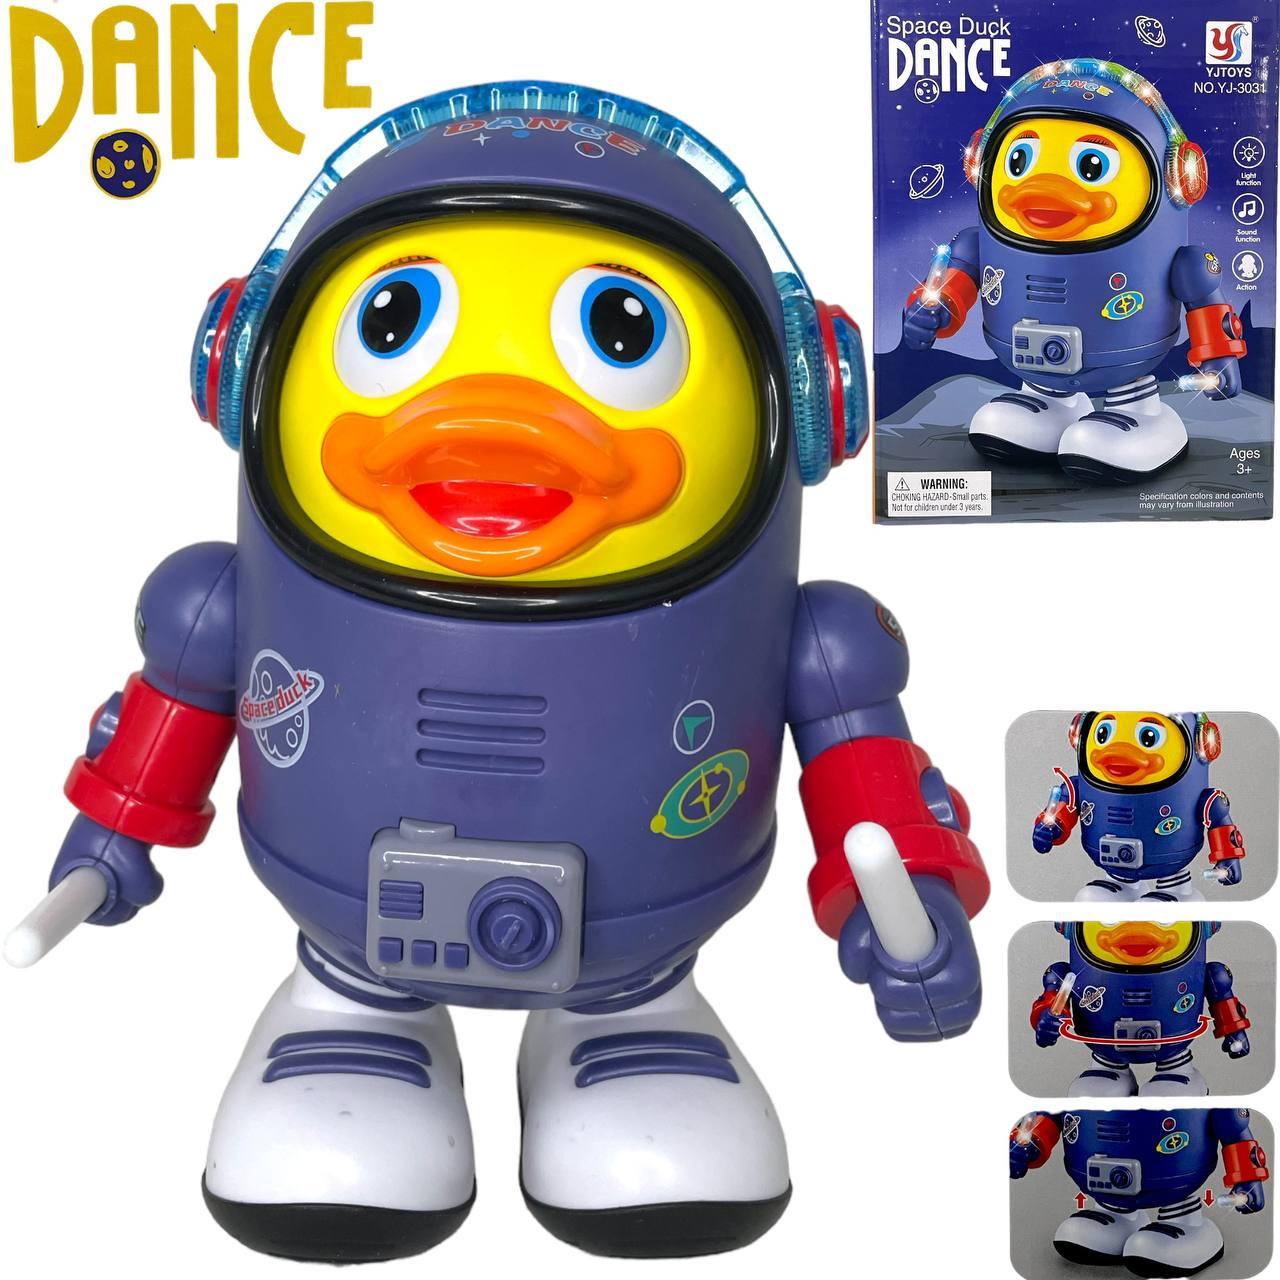 YJ3031 Космическая утка (танцует,музыка,свет) Space Duck Dance 19*15см